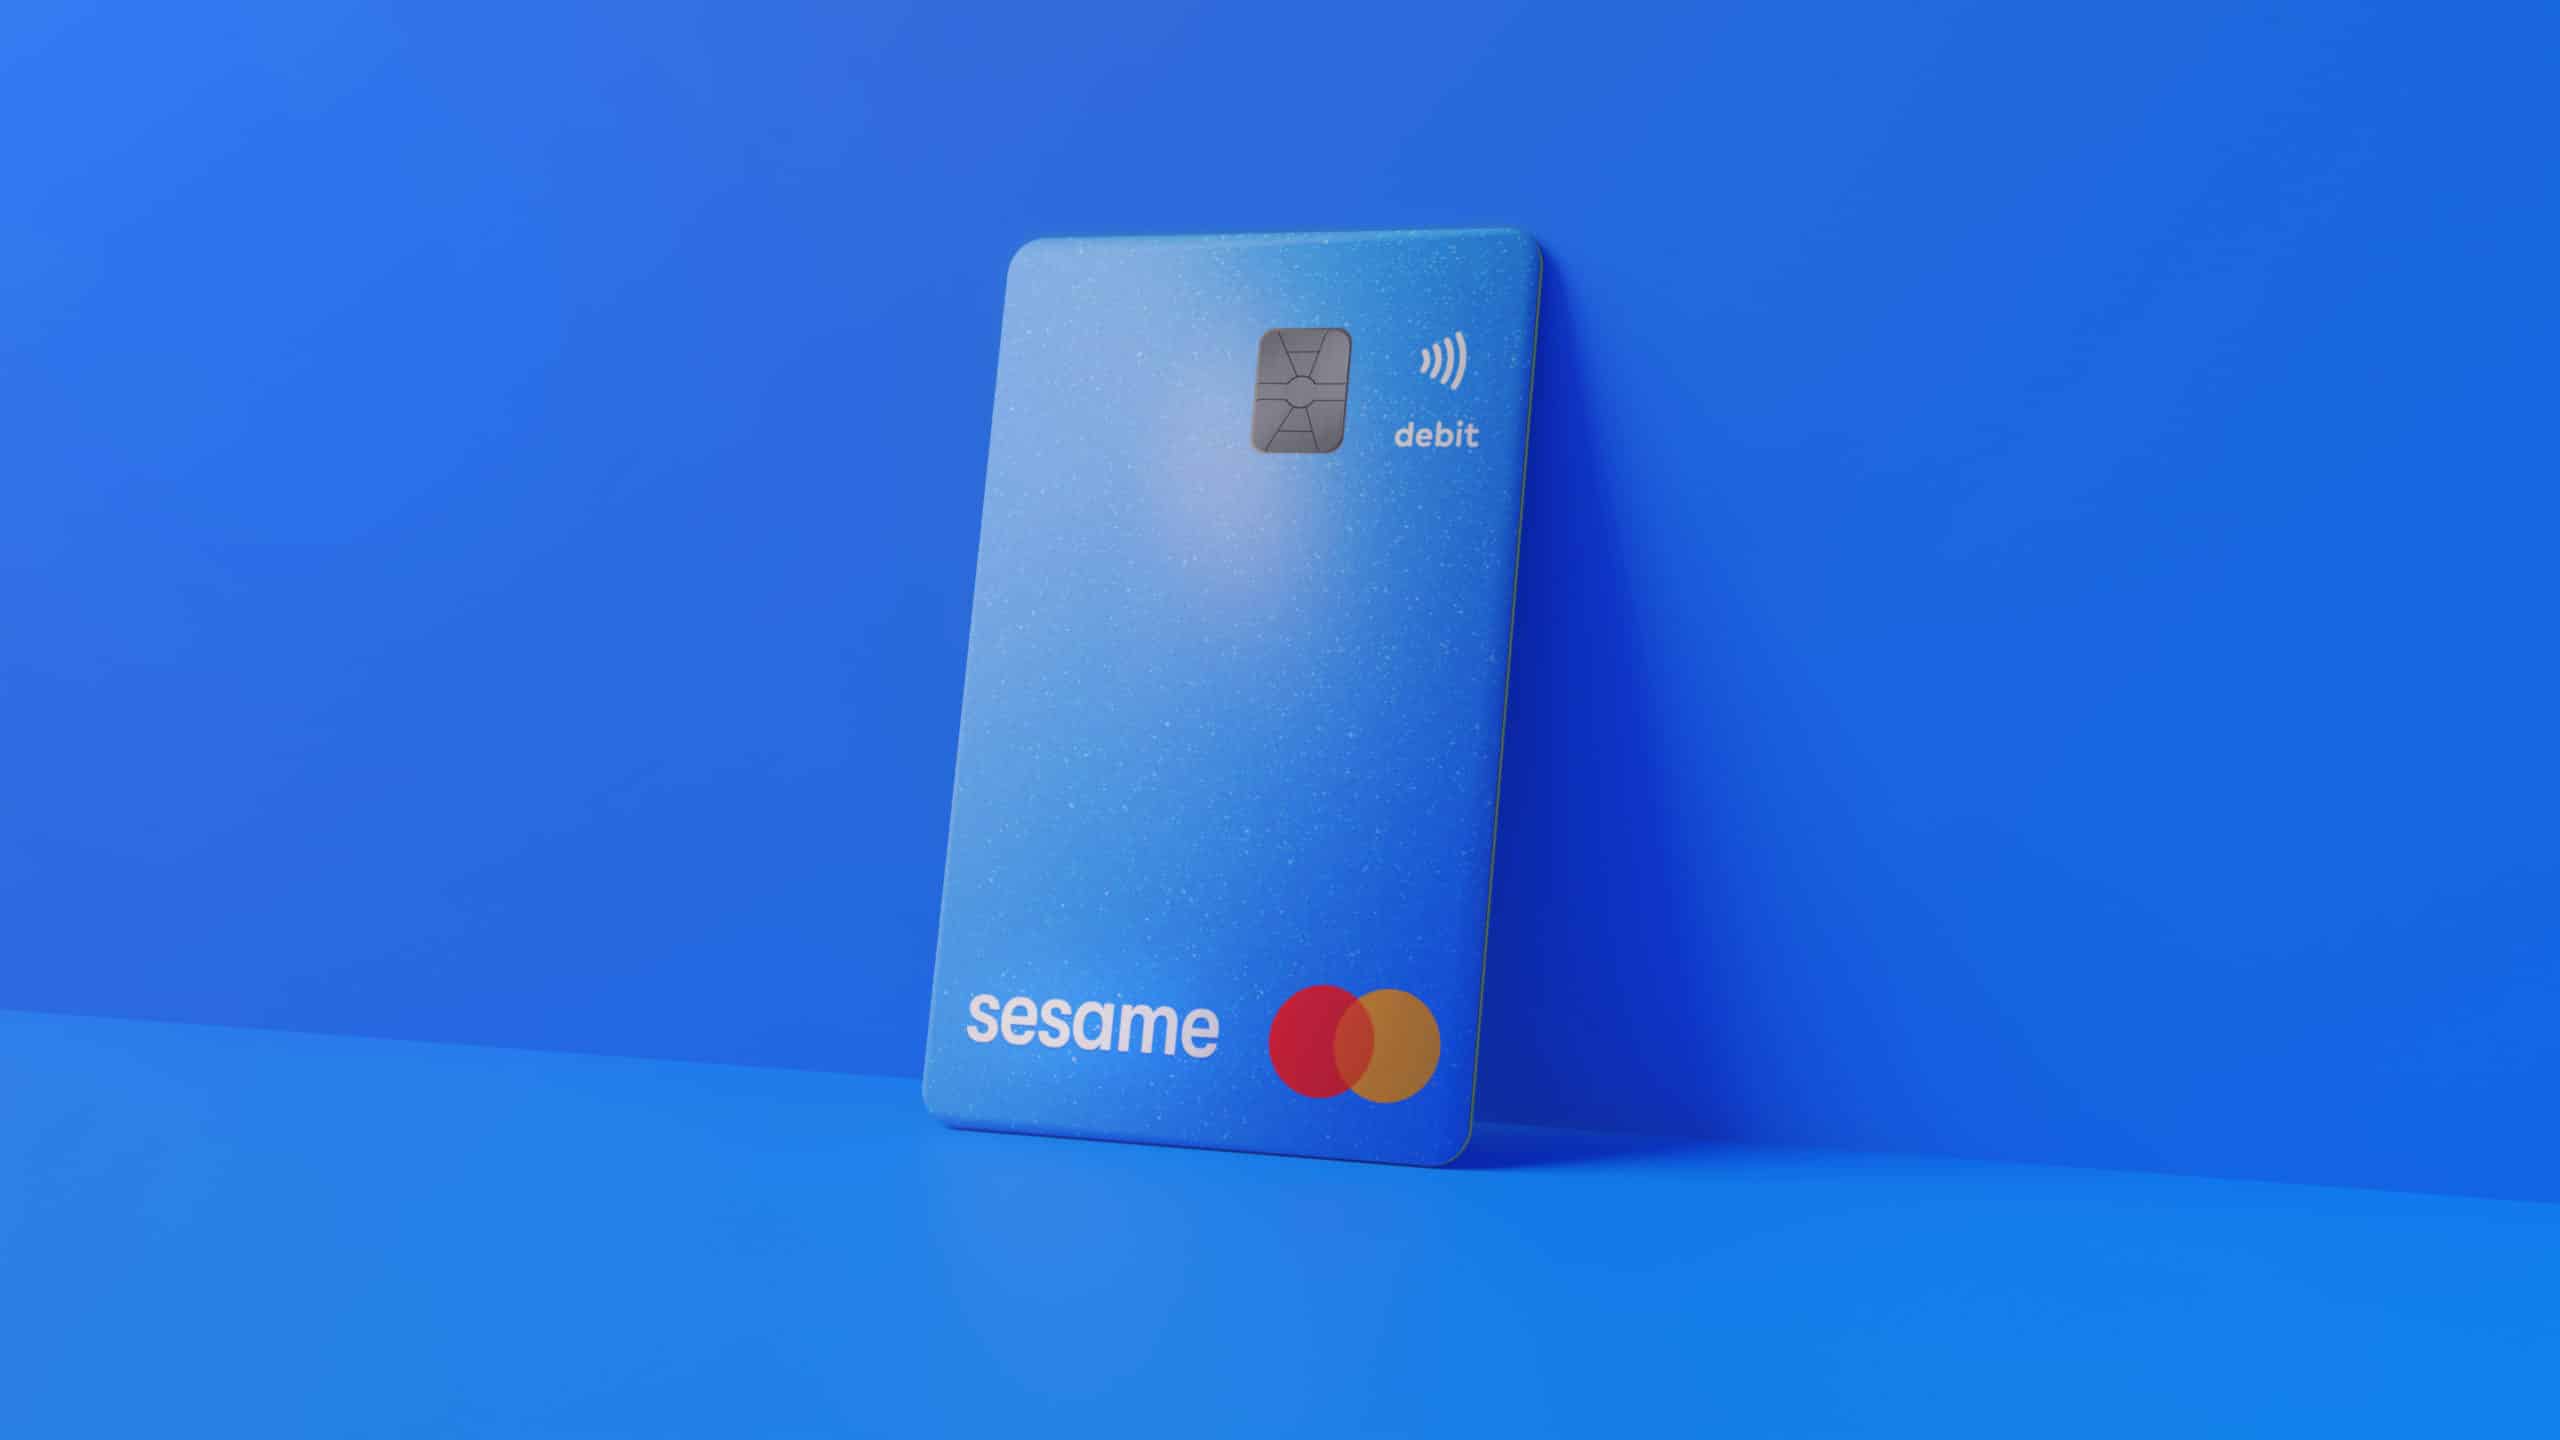 Blue Credit Card with 'sesame' Logo